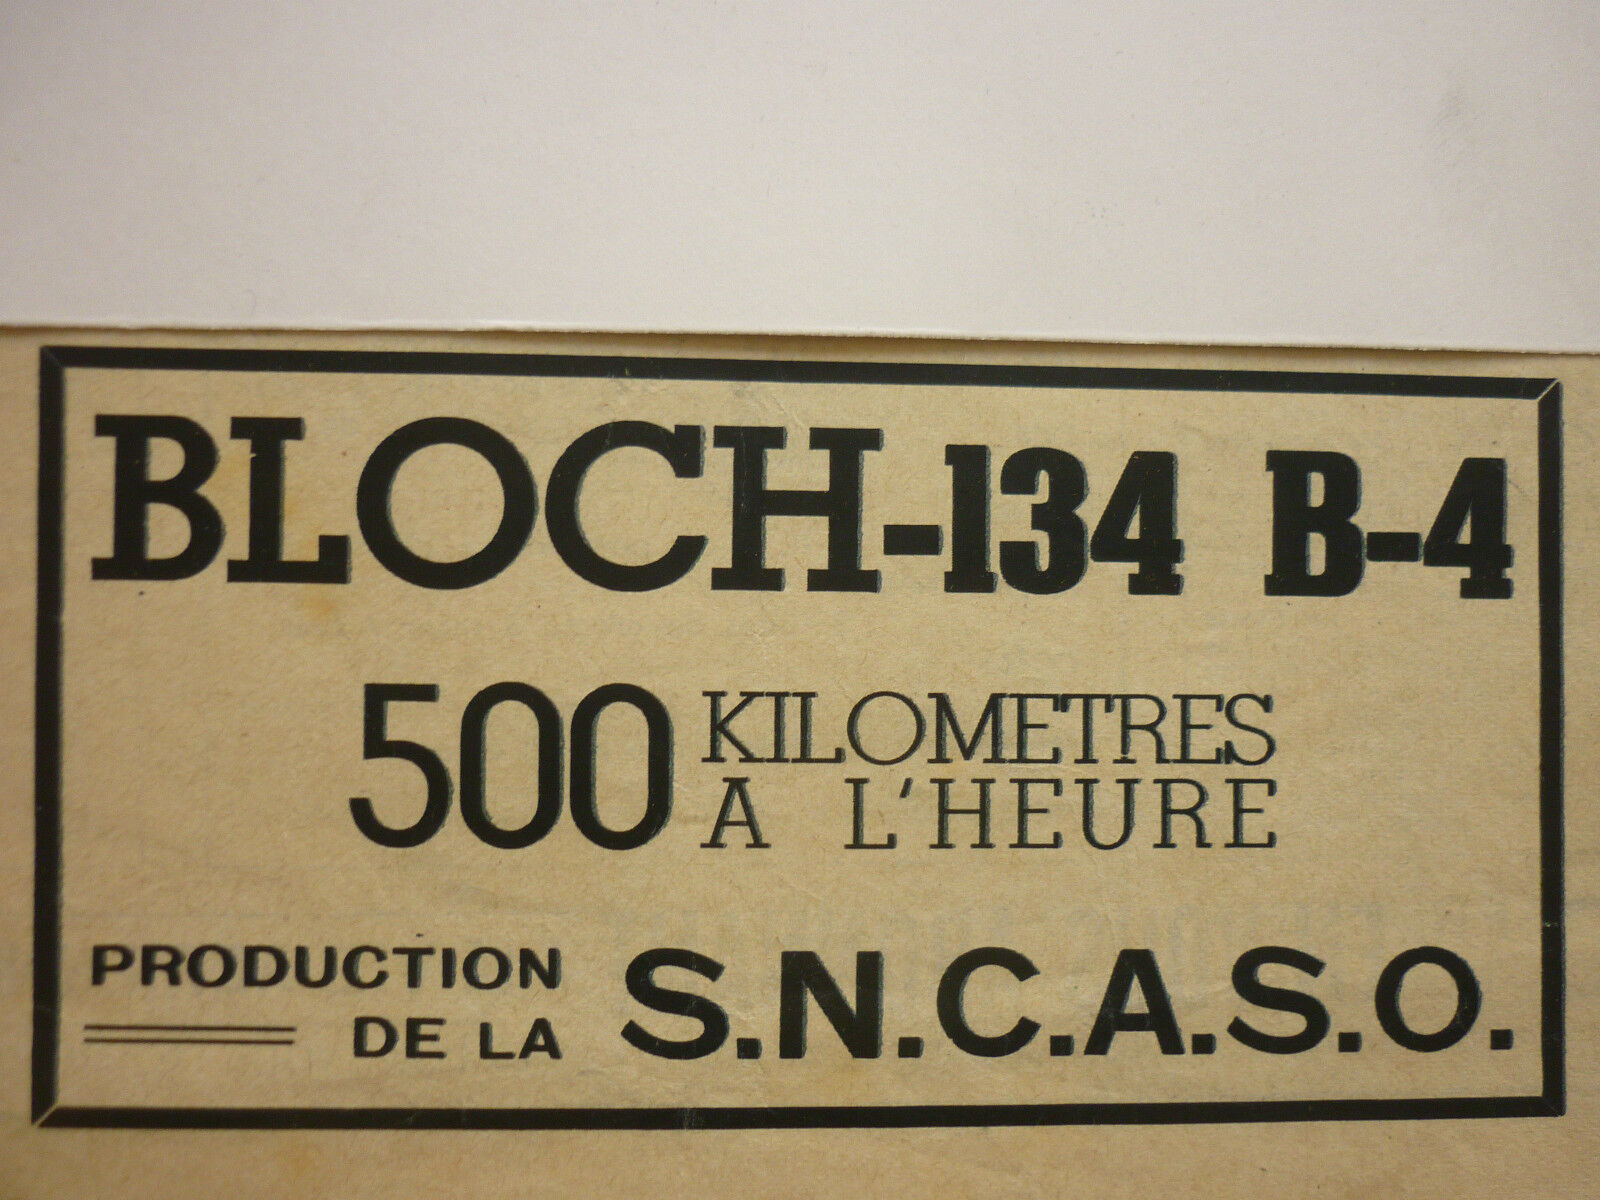 9/1937 PUB AIRCRAFT MARCEL BLOCH SNCASO BLOCH 134 B-4 ORIGINAL AD